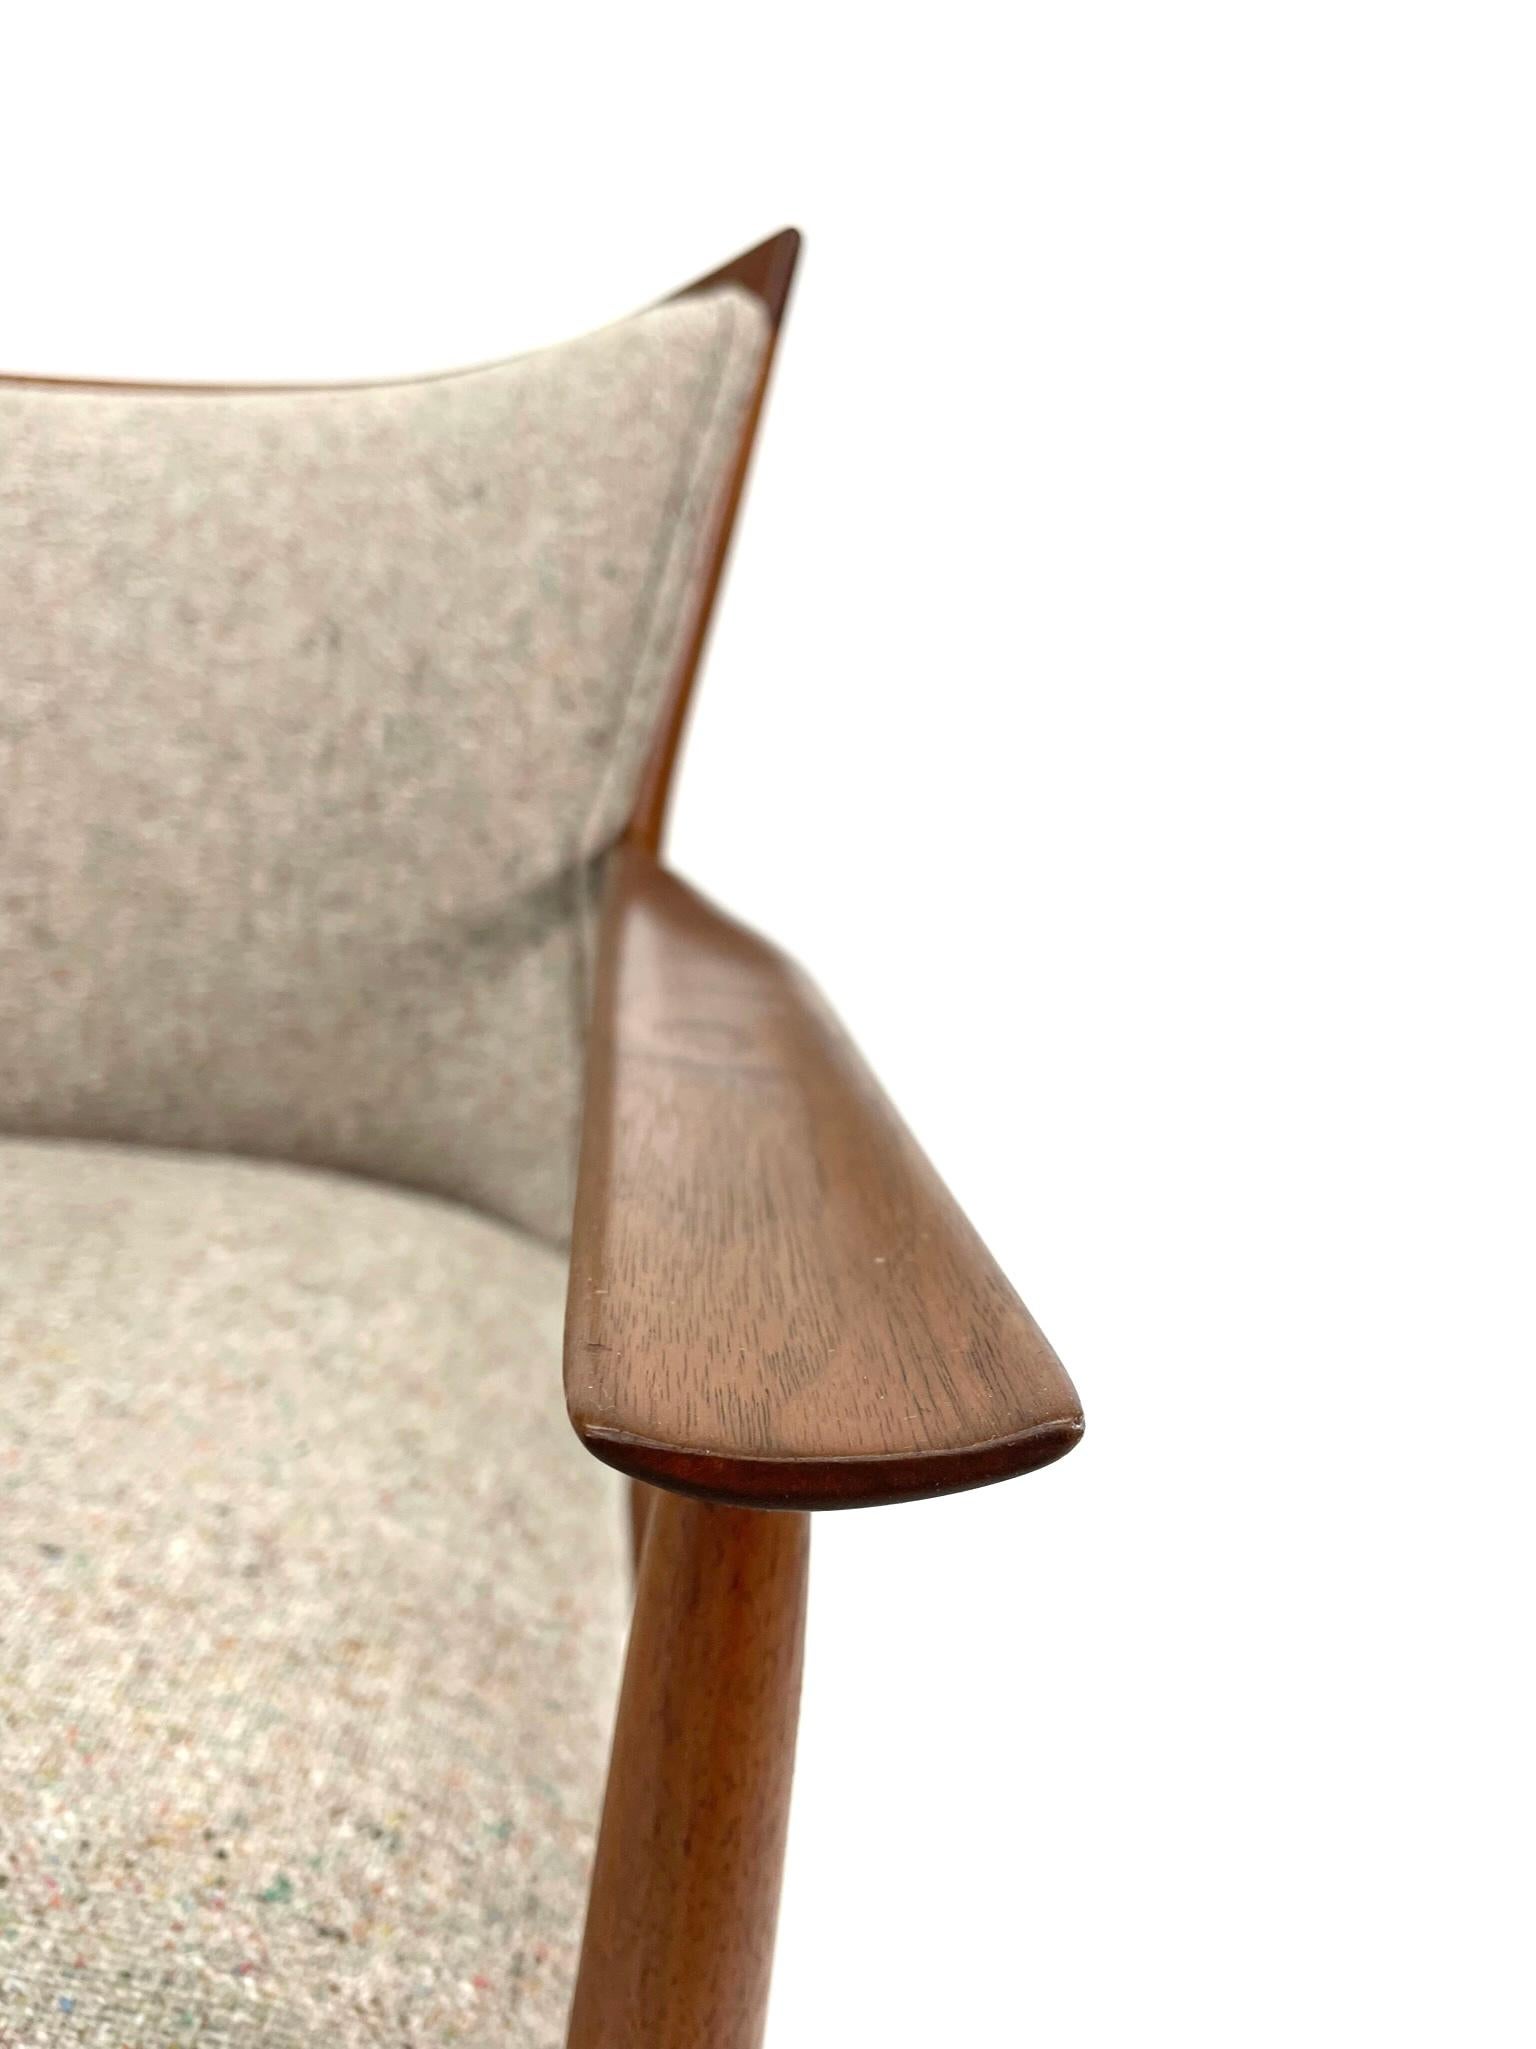 Upholstery Paul Mccobb Armchair for Directional